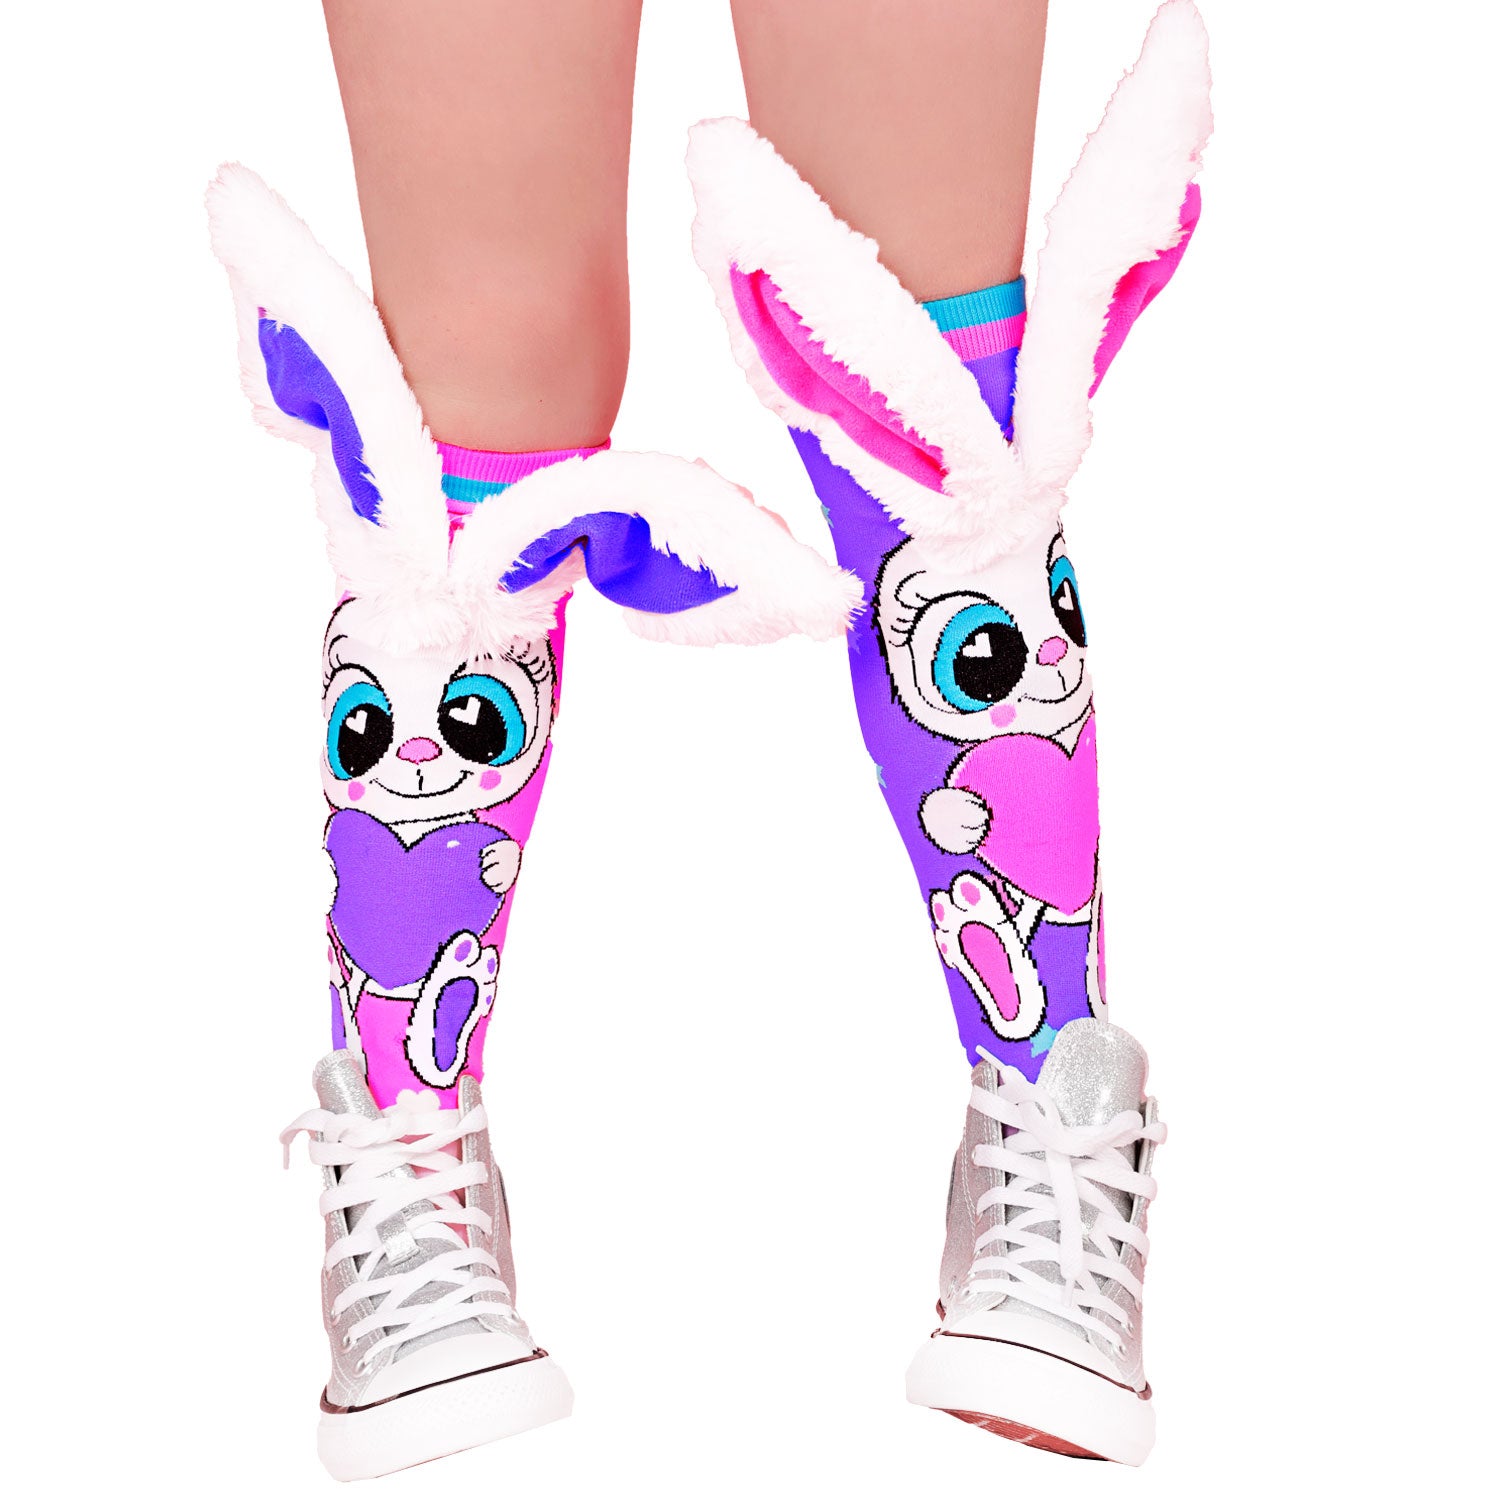 MadMia Designer Socks - Teens/Tweens/Adults